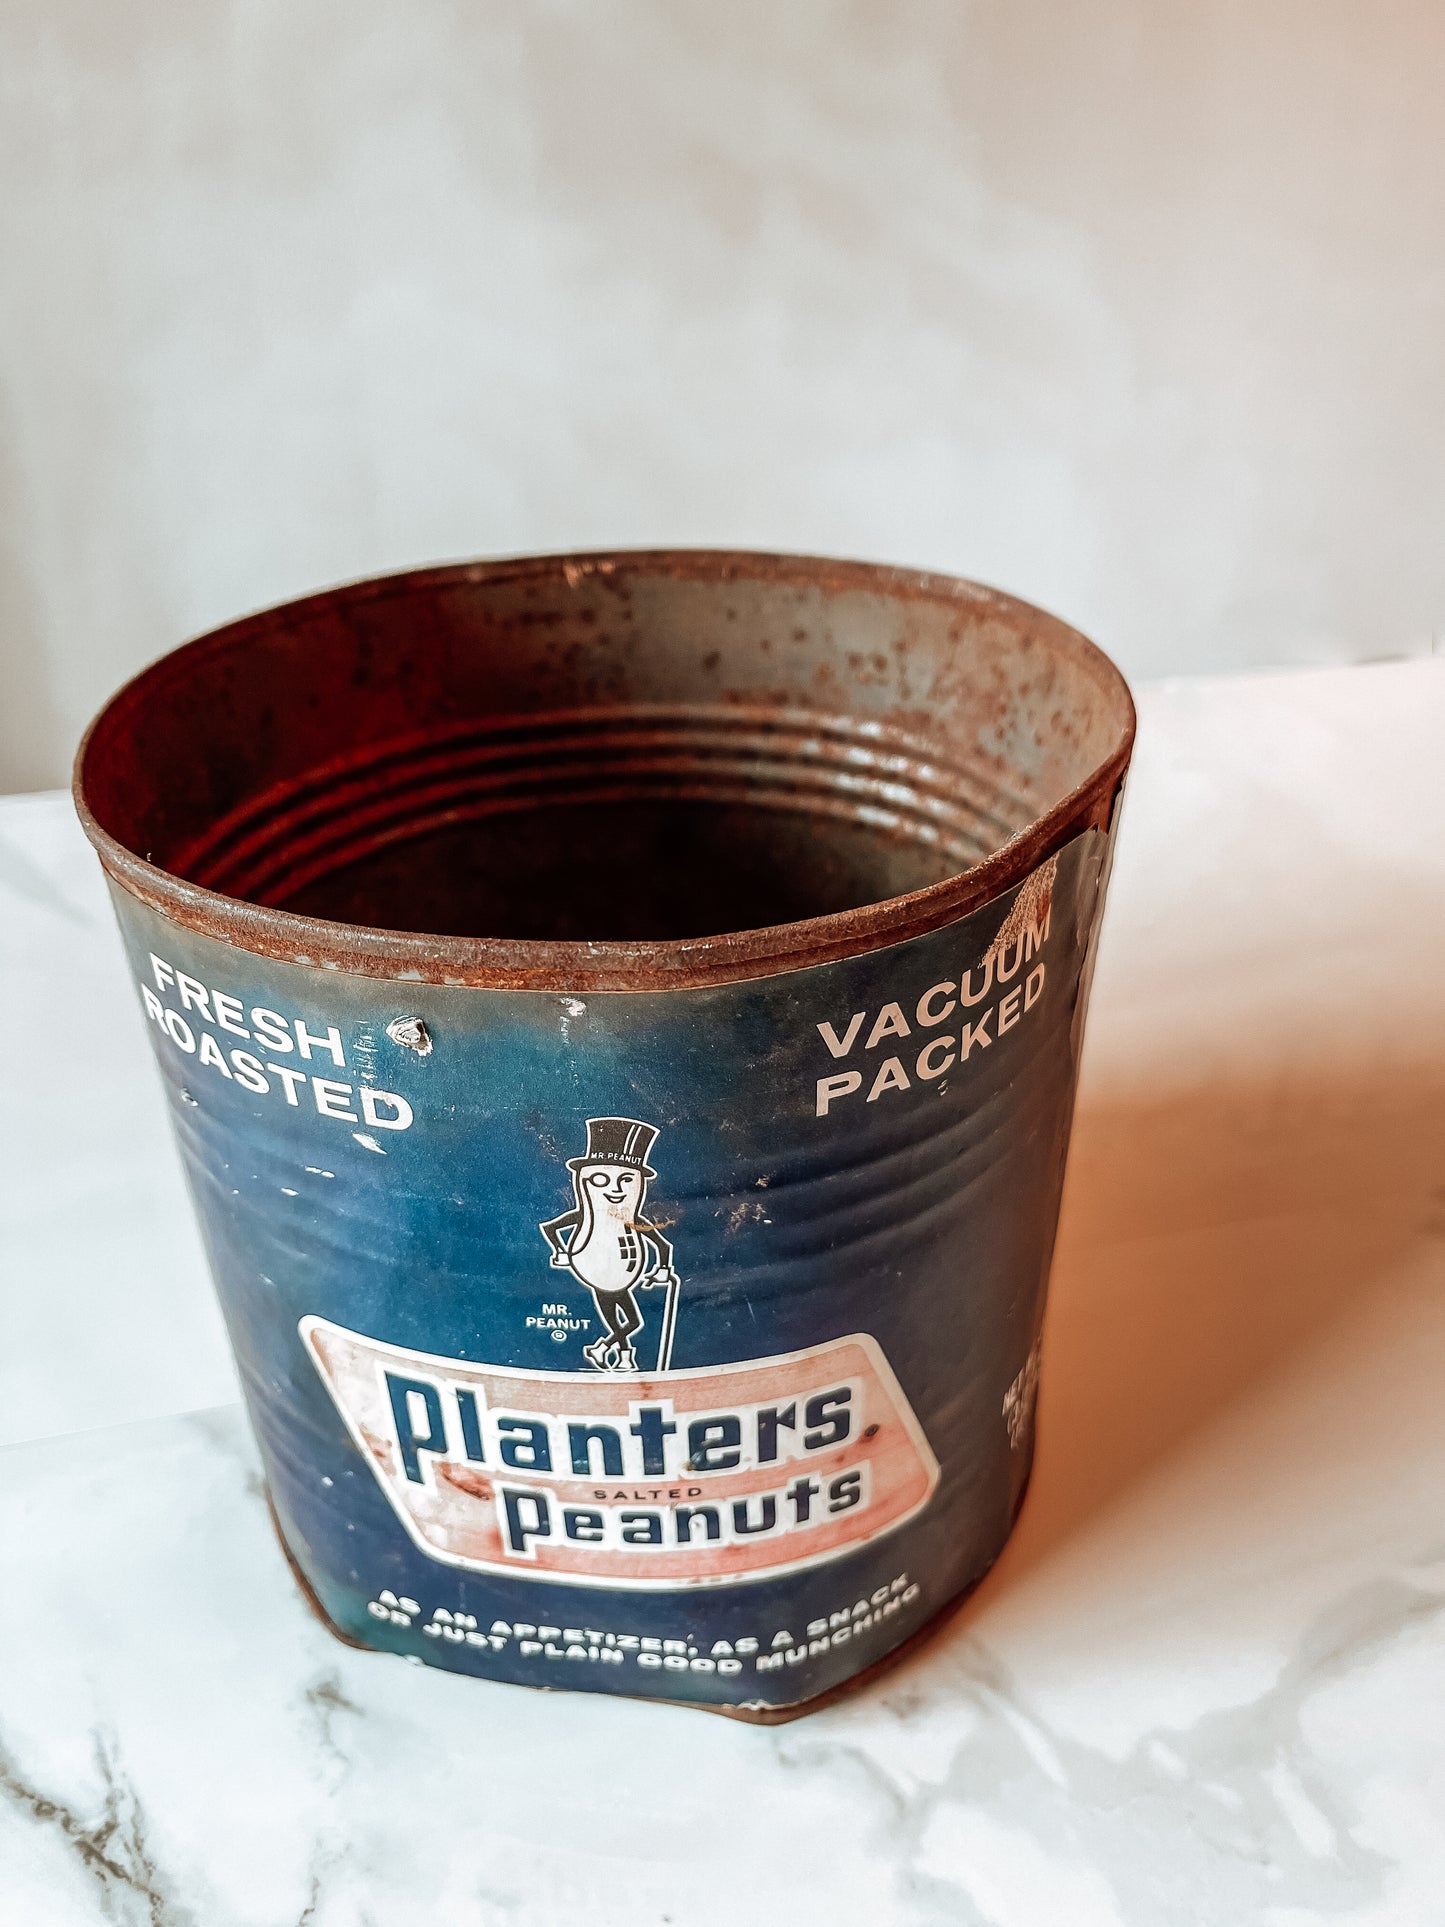 Vintage Planters Peanuts 56oz can featuring Mr. Peanut